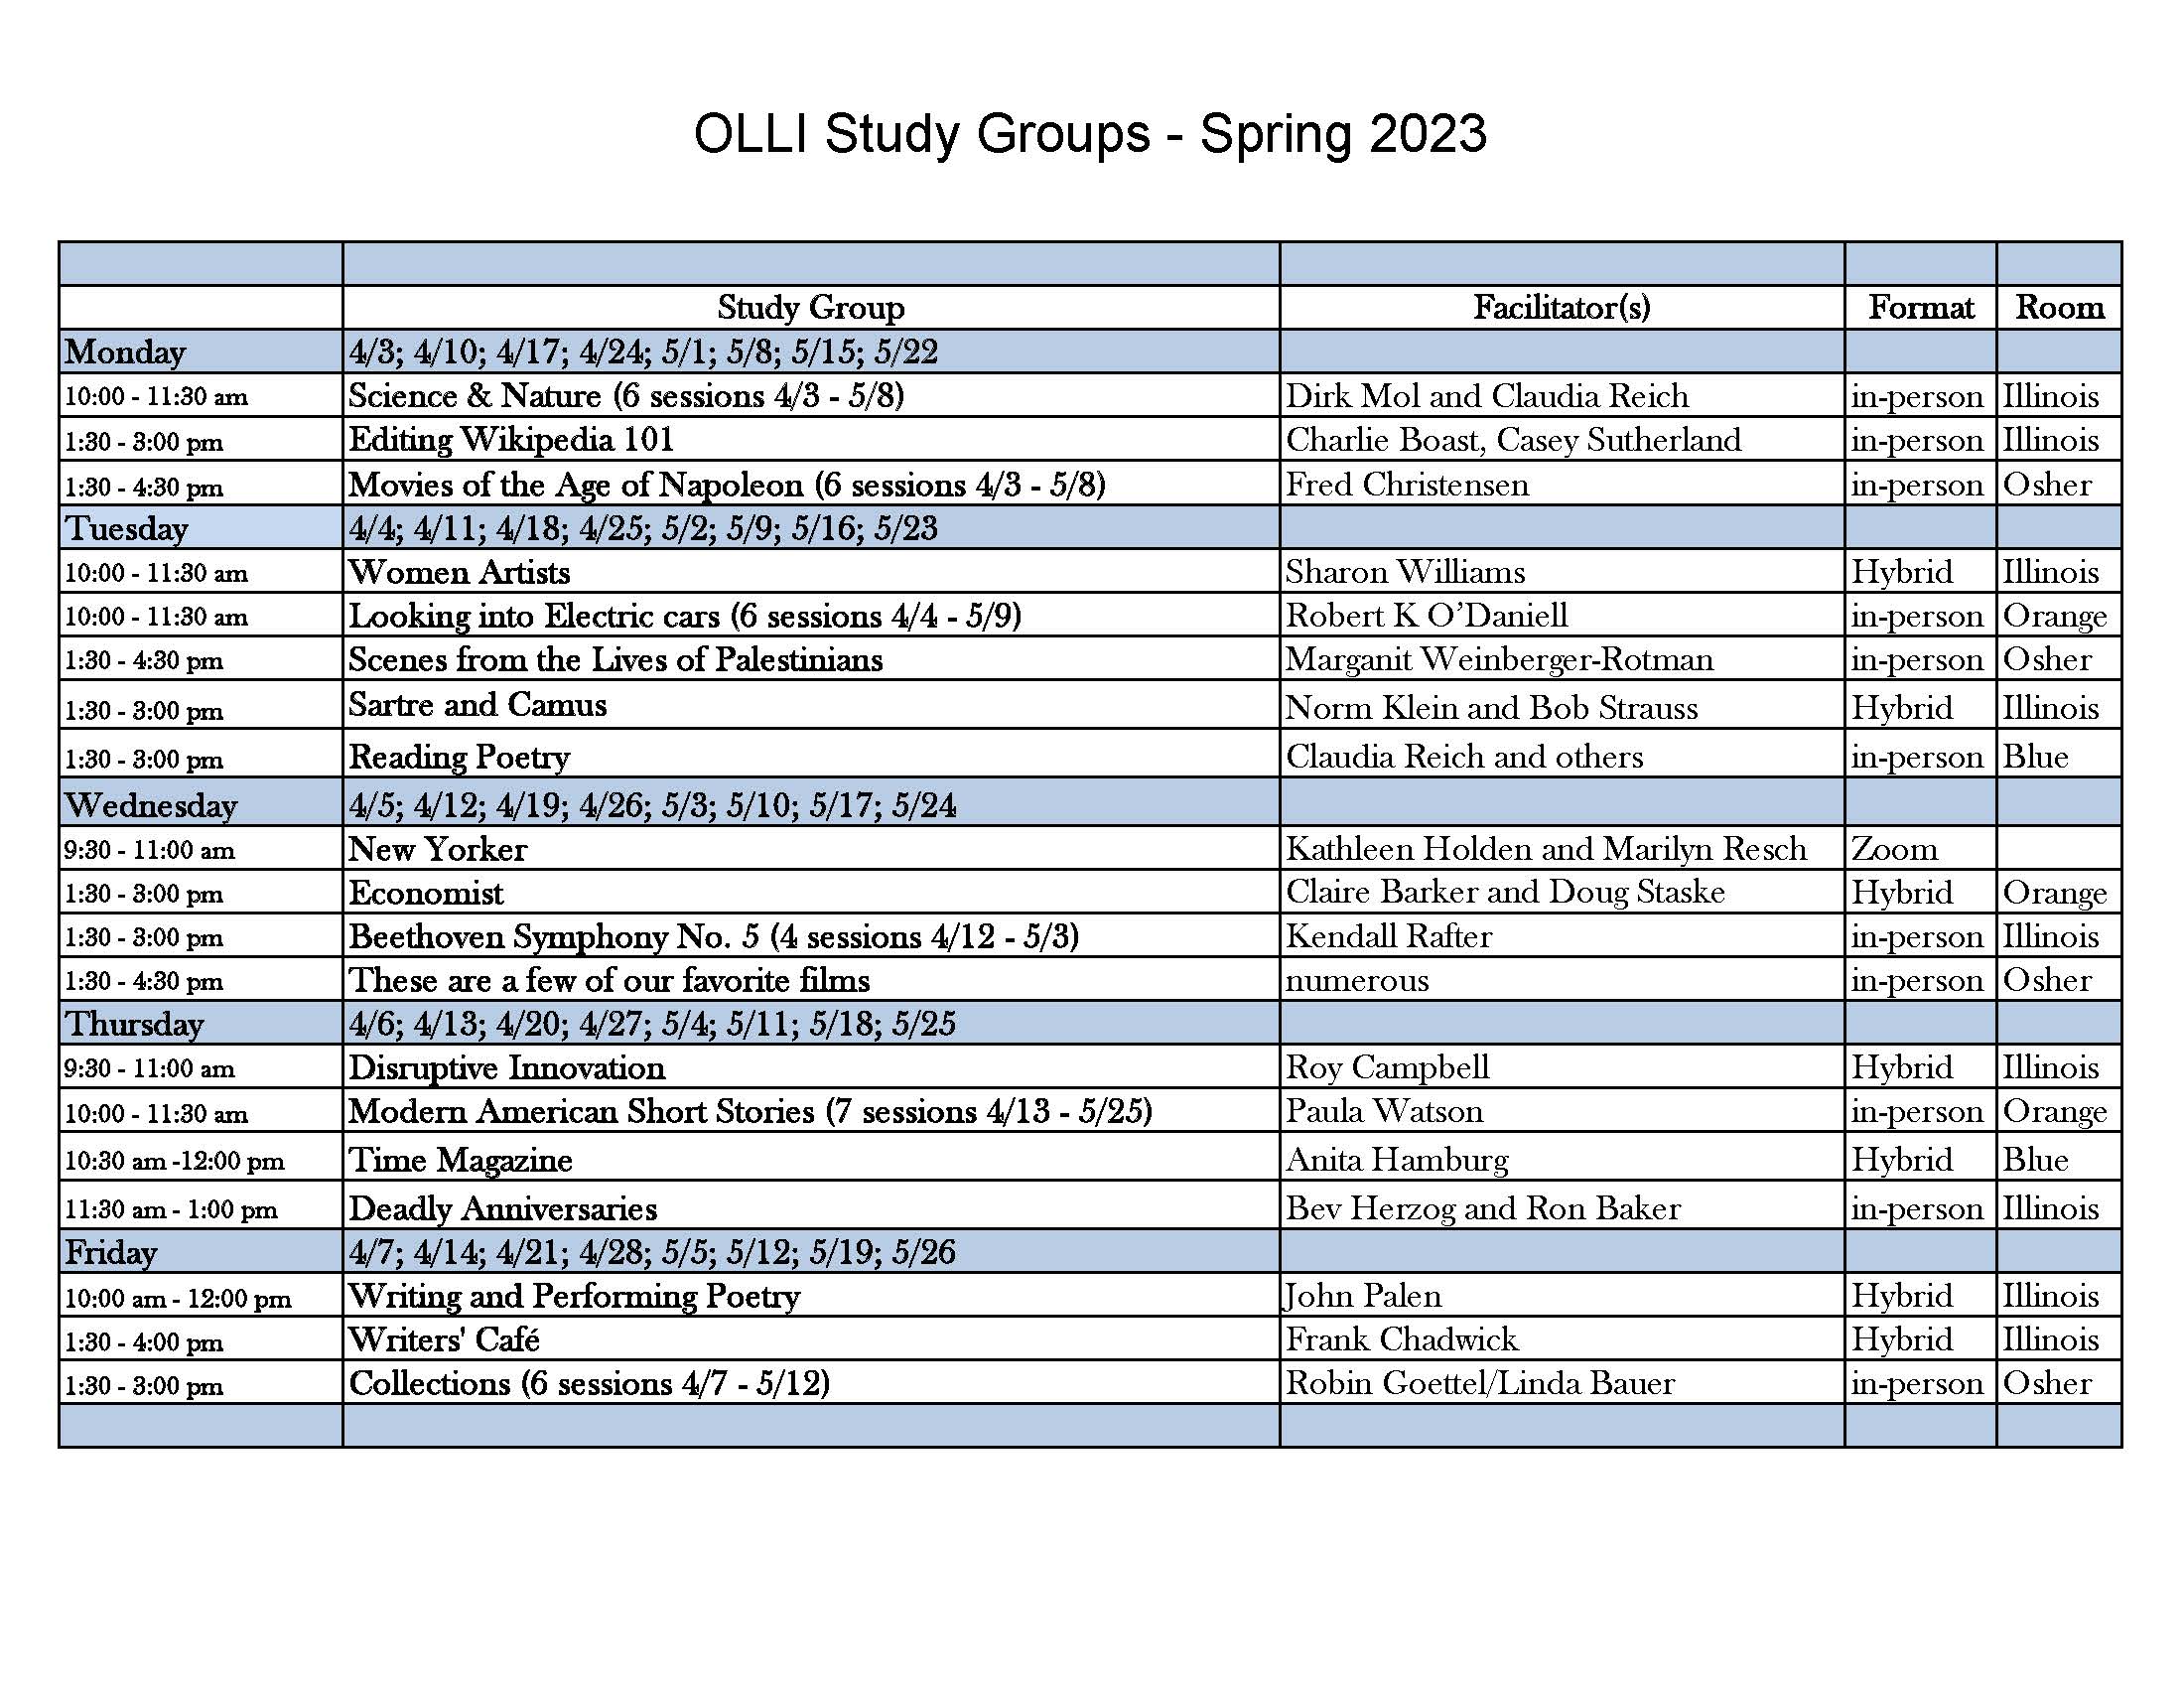 olli.illinois.edu /downloads/studygroups/2023 Spring Study Groups/